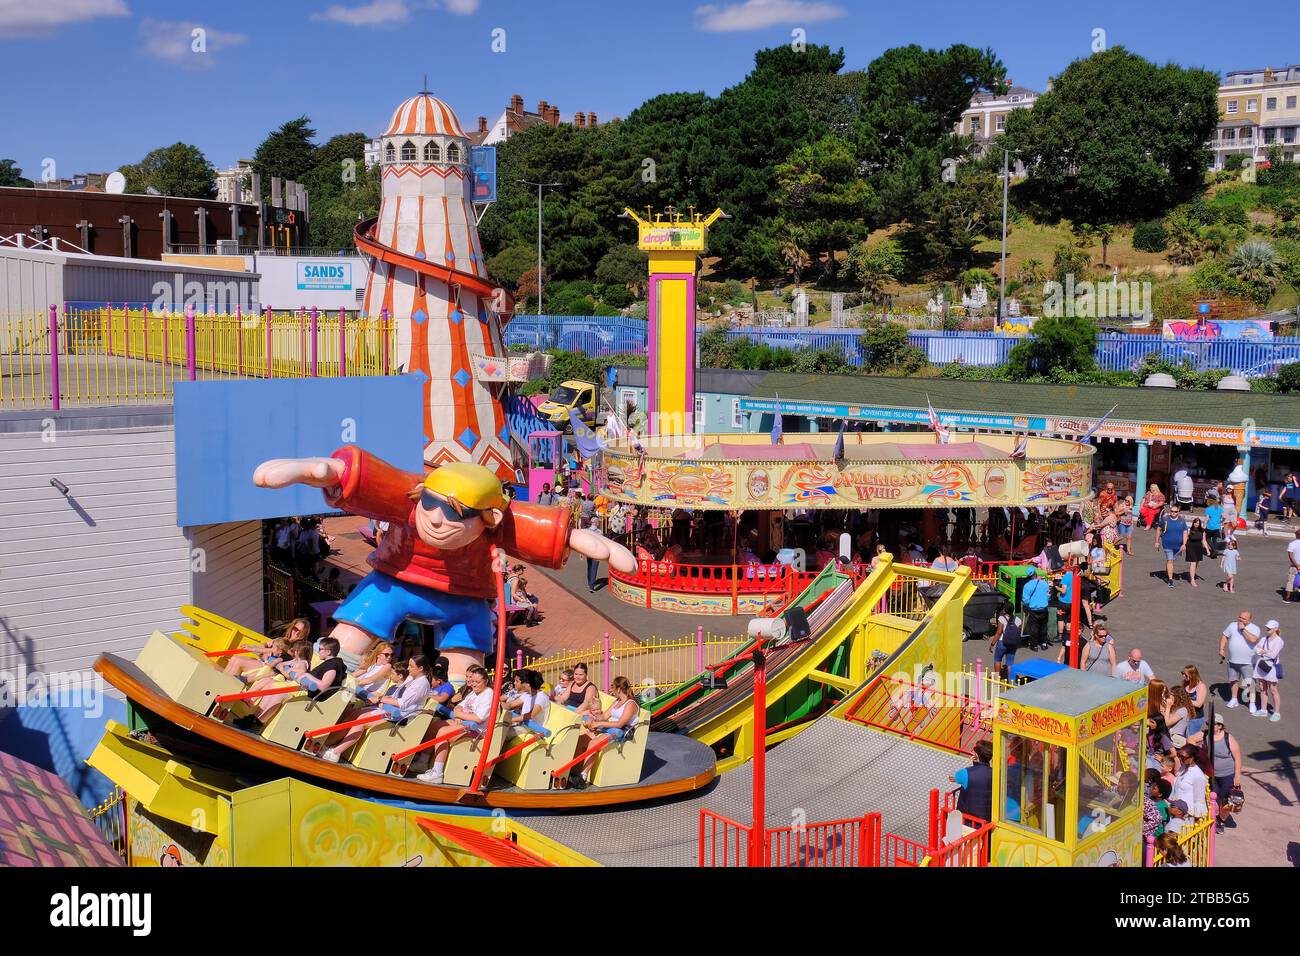 Southend-on-Sea: Colourful Adventure Island amusement theme park in Southend-on-Sea, Essex, England, UK Stock Photo